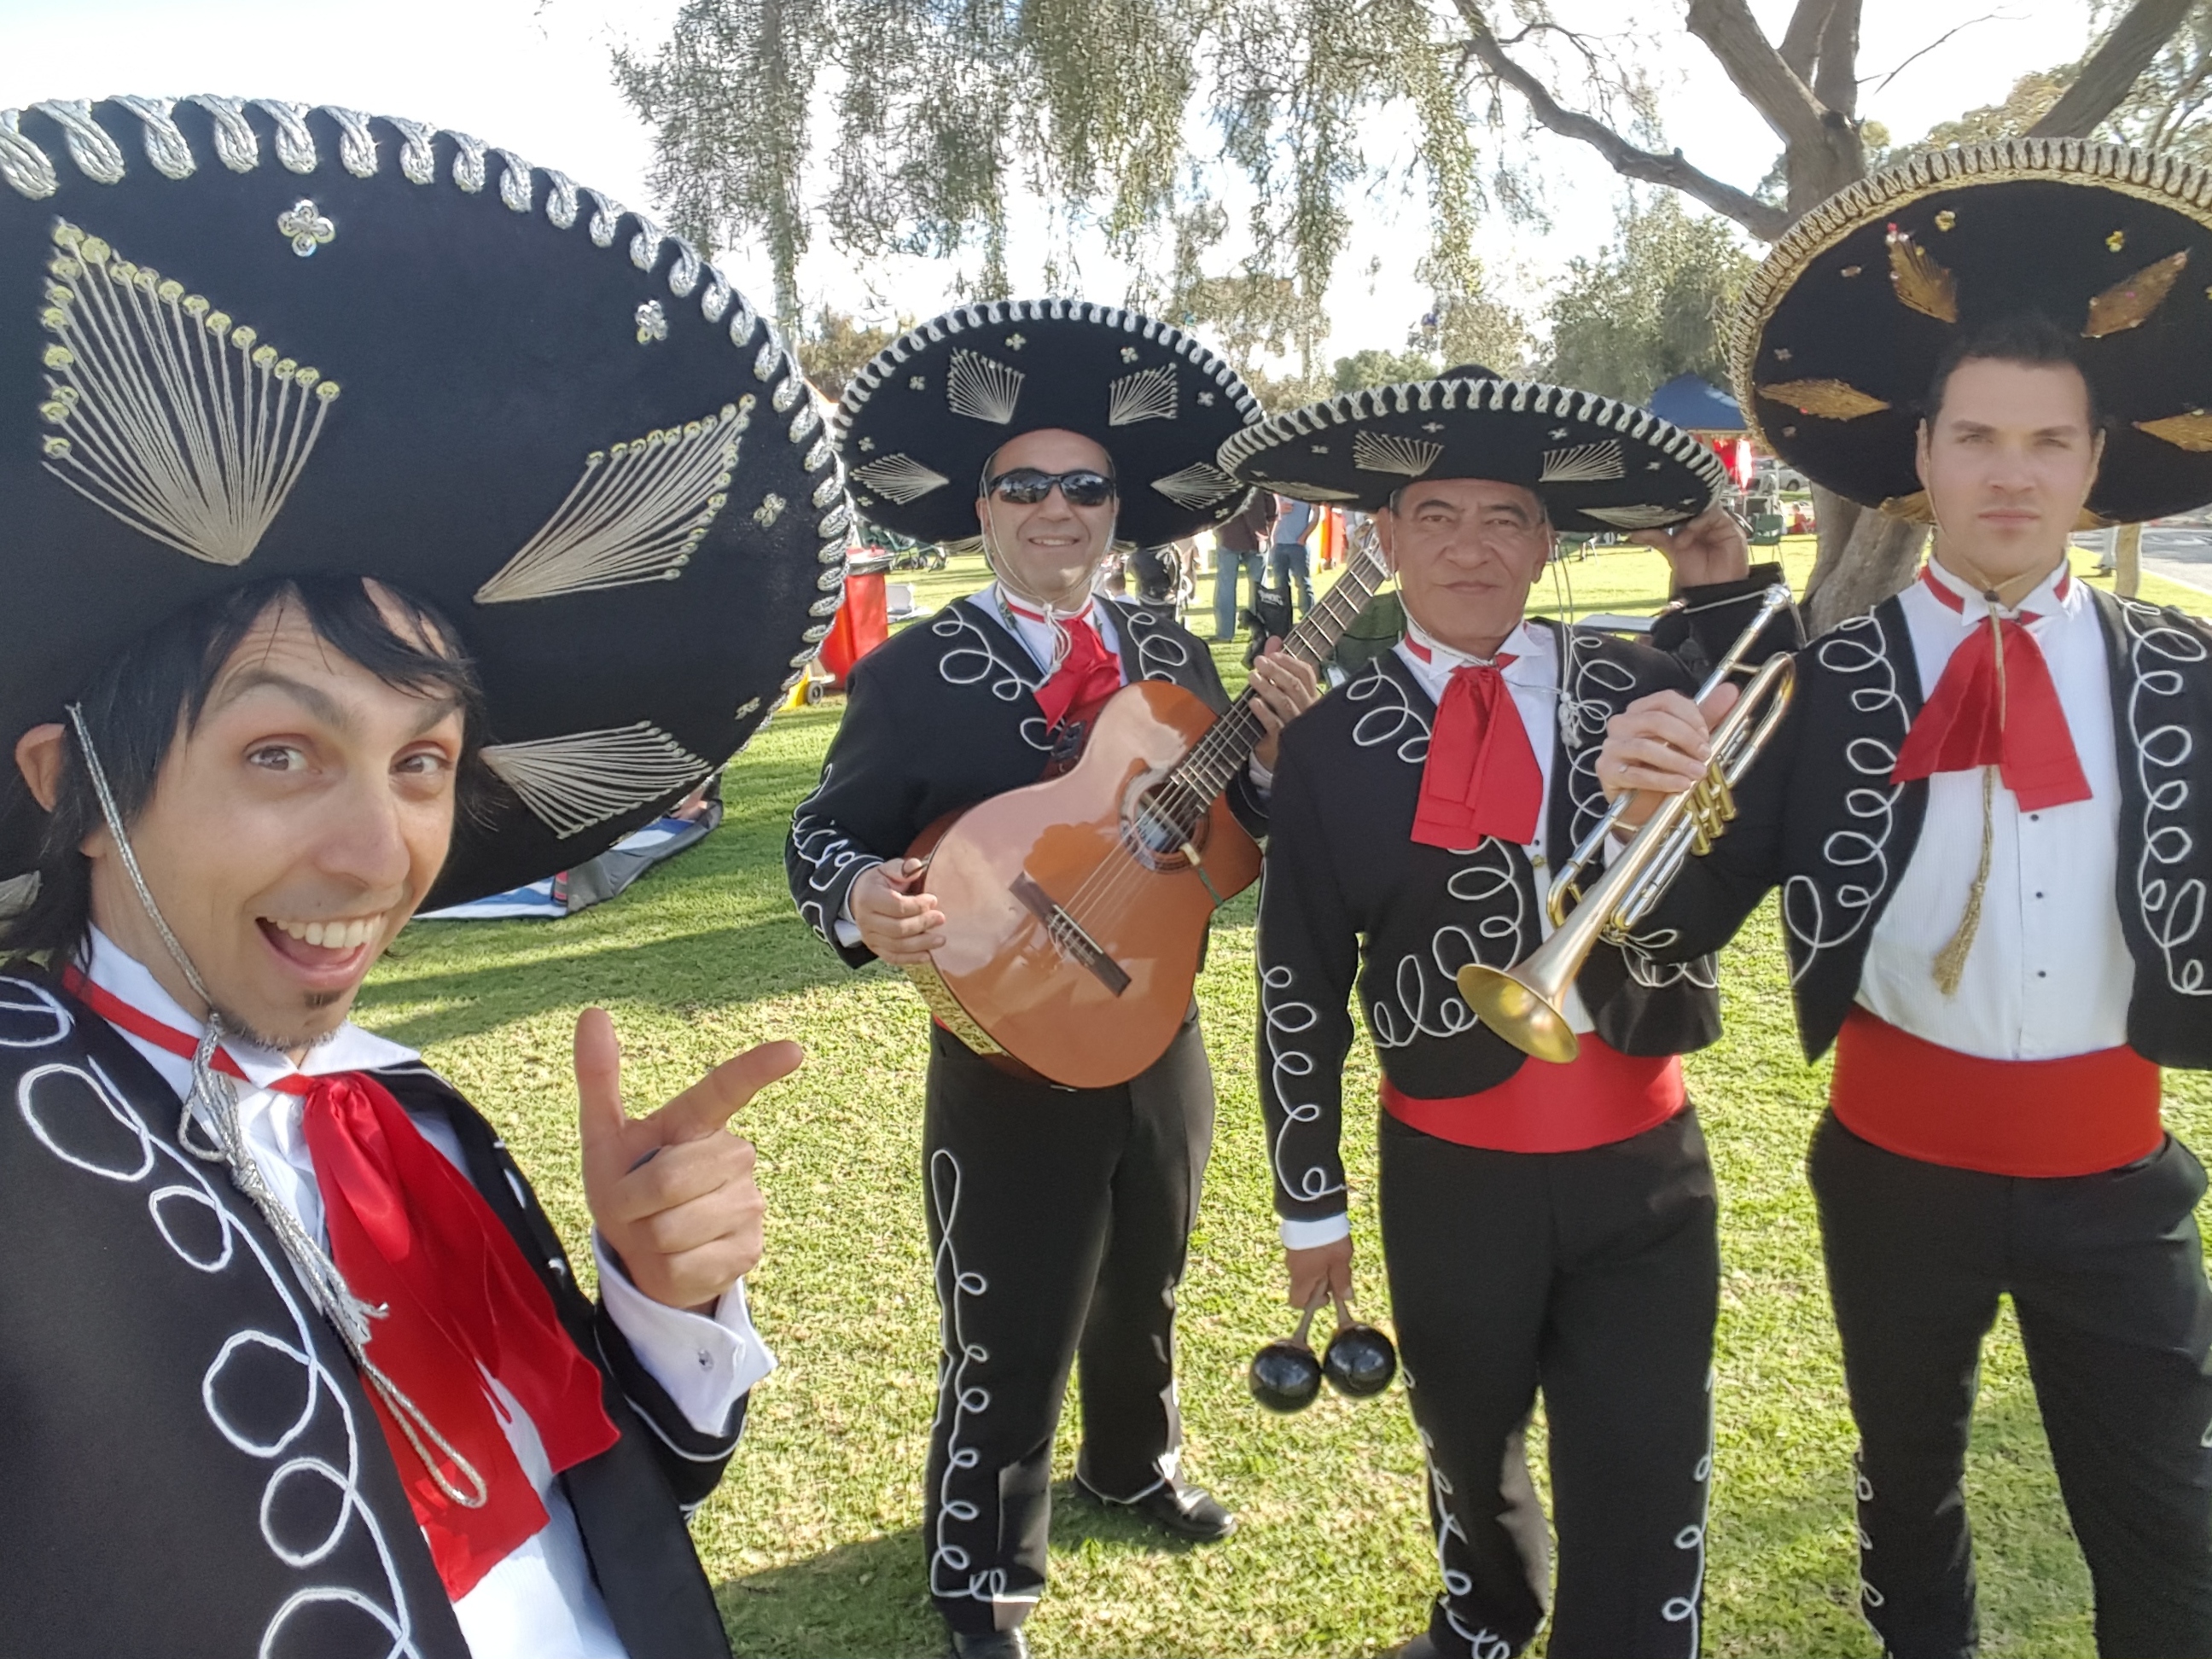 Roxby Downs Festival Multicultural Festival Mexican Mariachi Band Australia Adelaide, Melbourne, Sydney, Brisbane, Darwin, Perth, Tasmania, Singapore, Hong Kong, Dubai